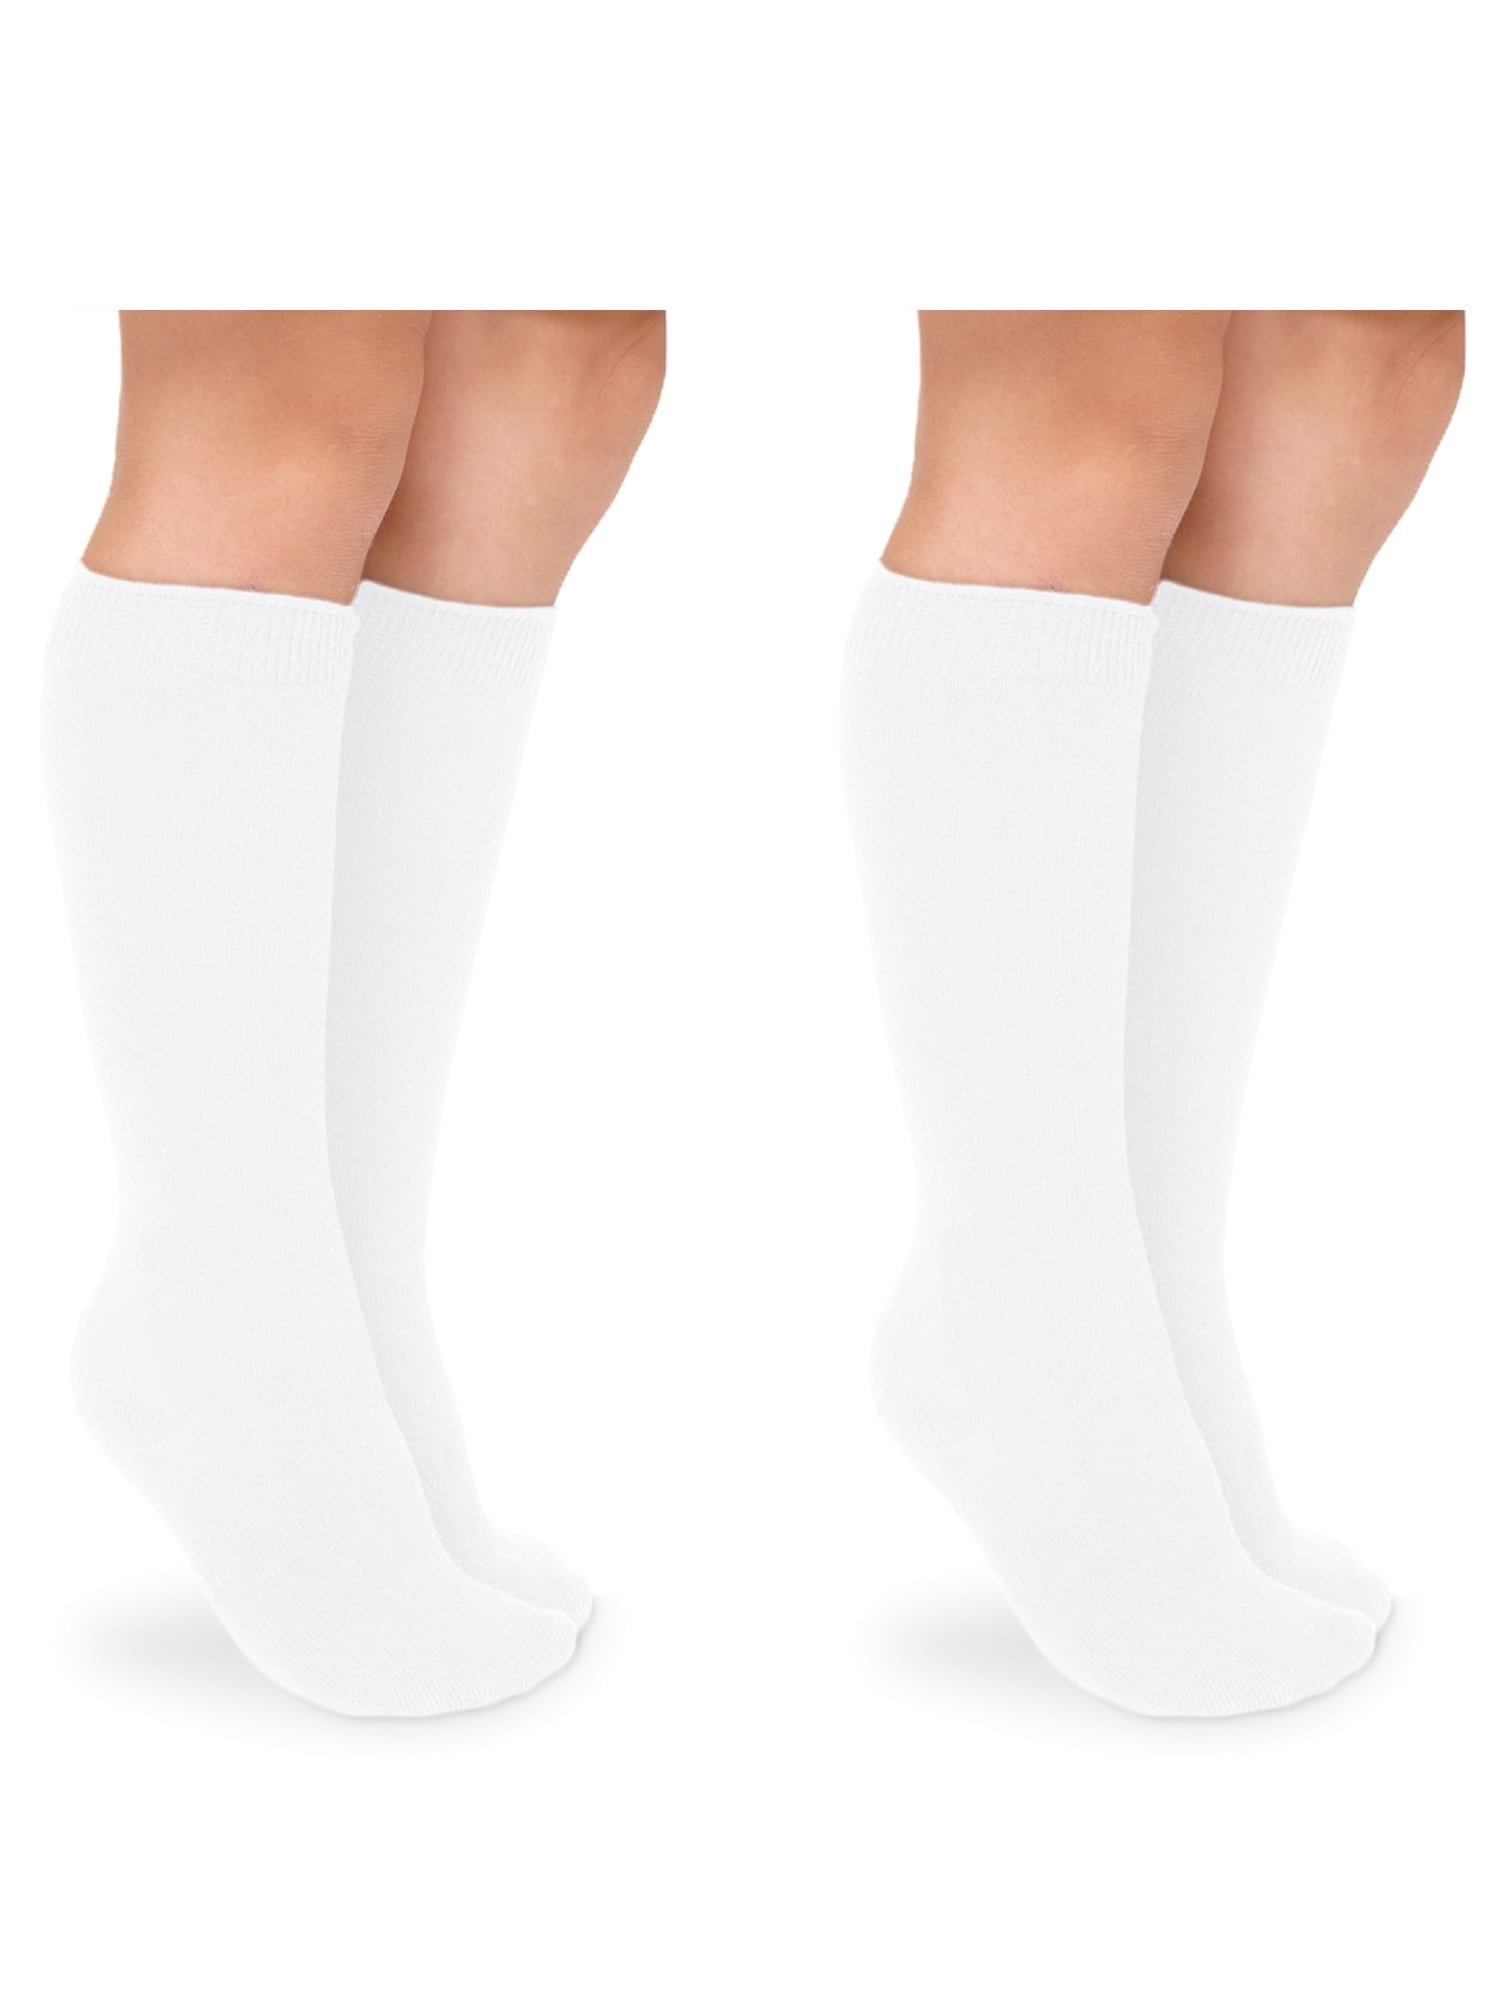 Jefferies Socks Boys Nylon Dress School Uniform Knee High Socks 2 Pair Pack 